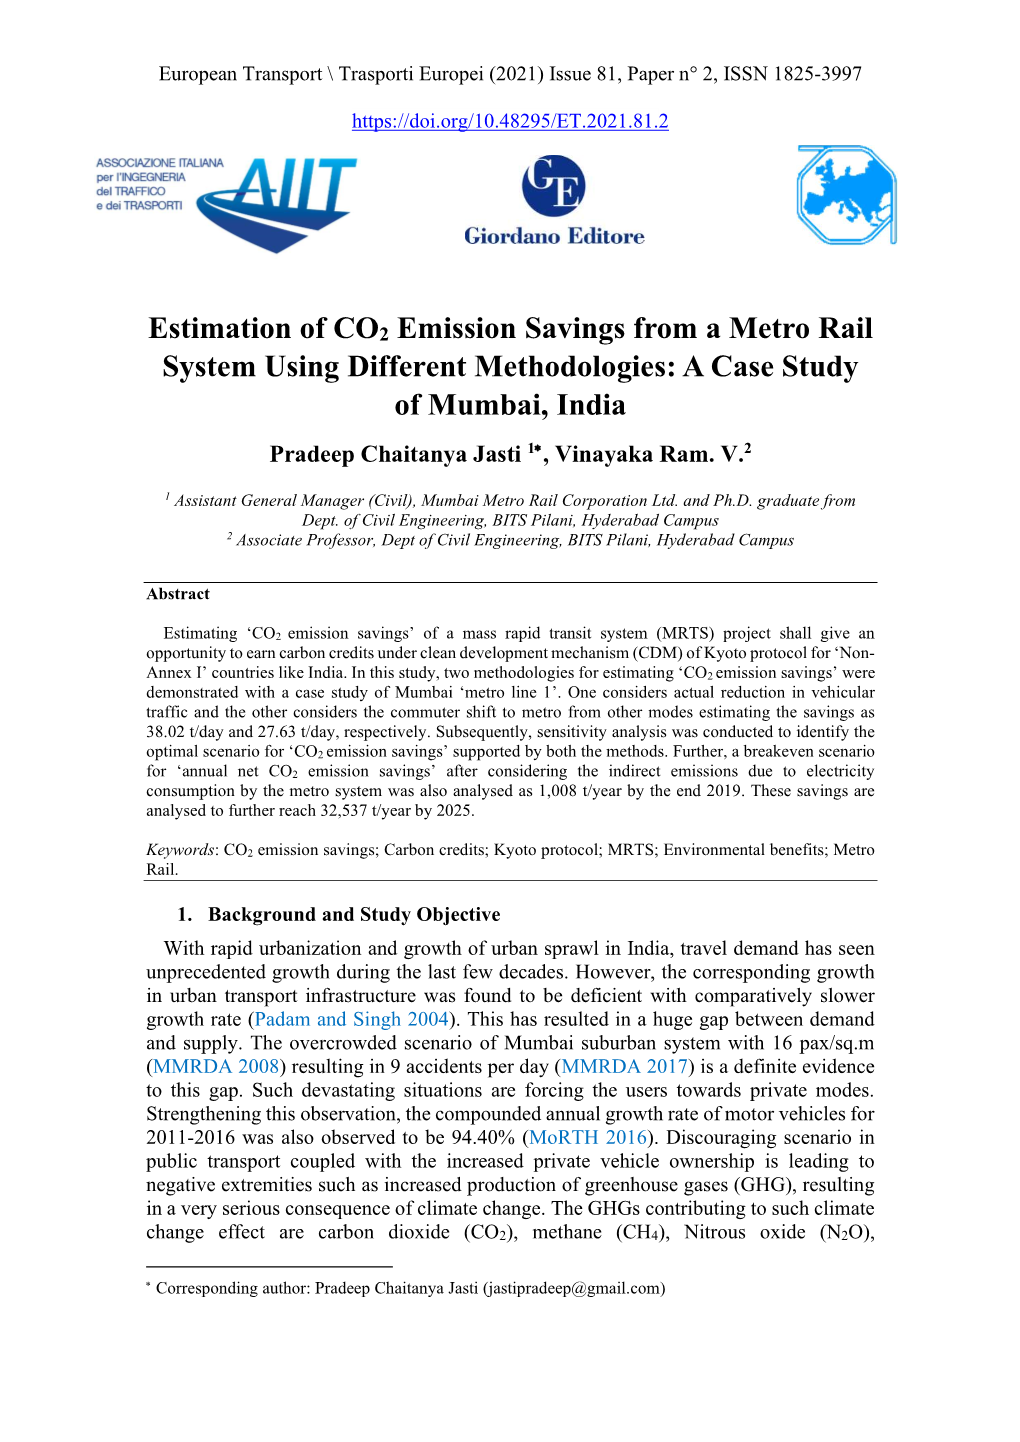 Estimation of CO2 Emission Savings from a Metro Rail System Using Different Methodologies: a Case Study of Mumbai, India Pradeep Chaitanya Jasti 1, Vinayaka Ram